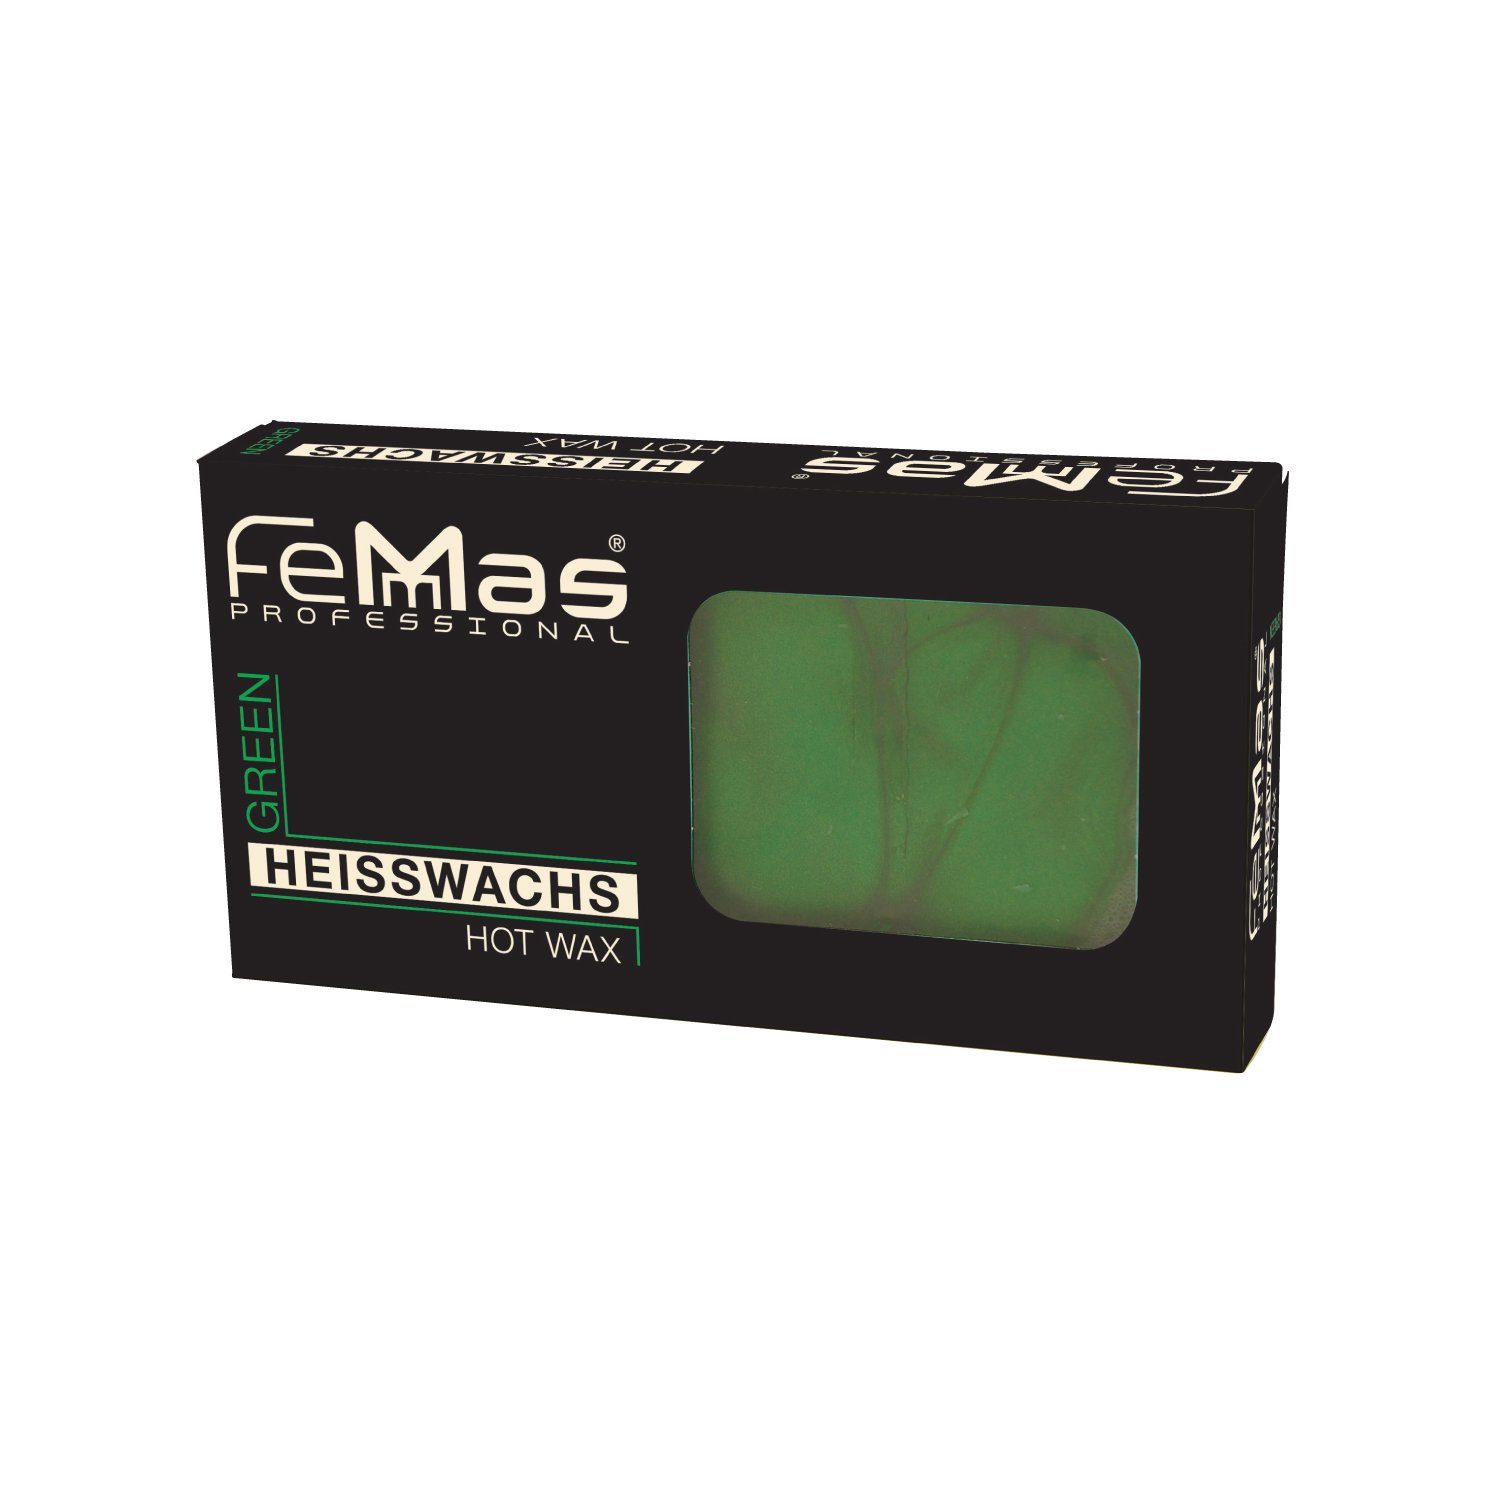 Femmas 500ml Heisswachs Green Premium Enthaarungswachs FemMas